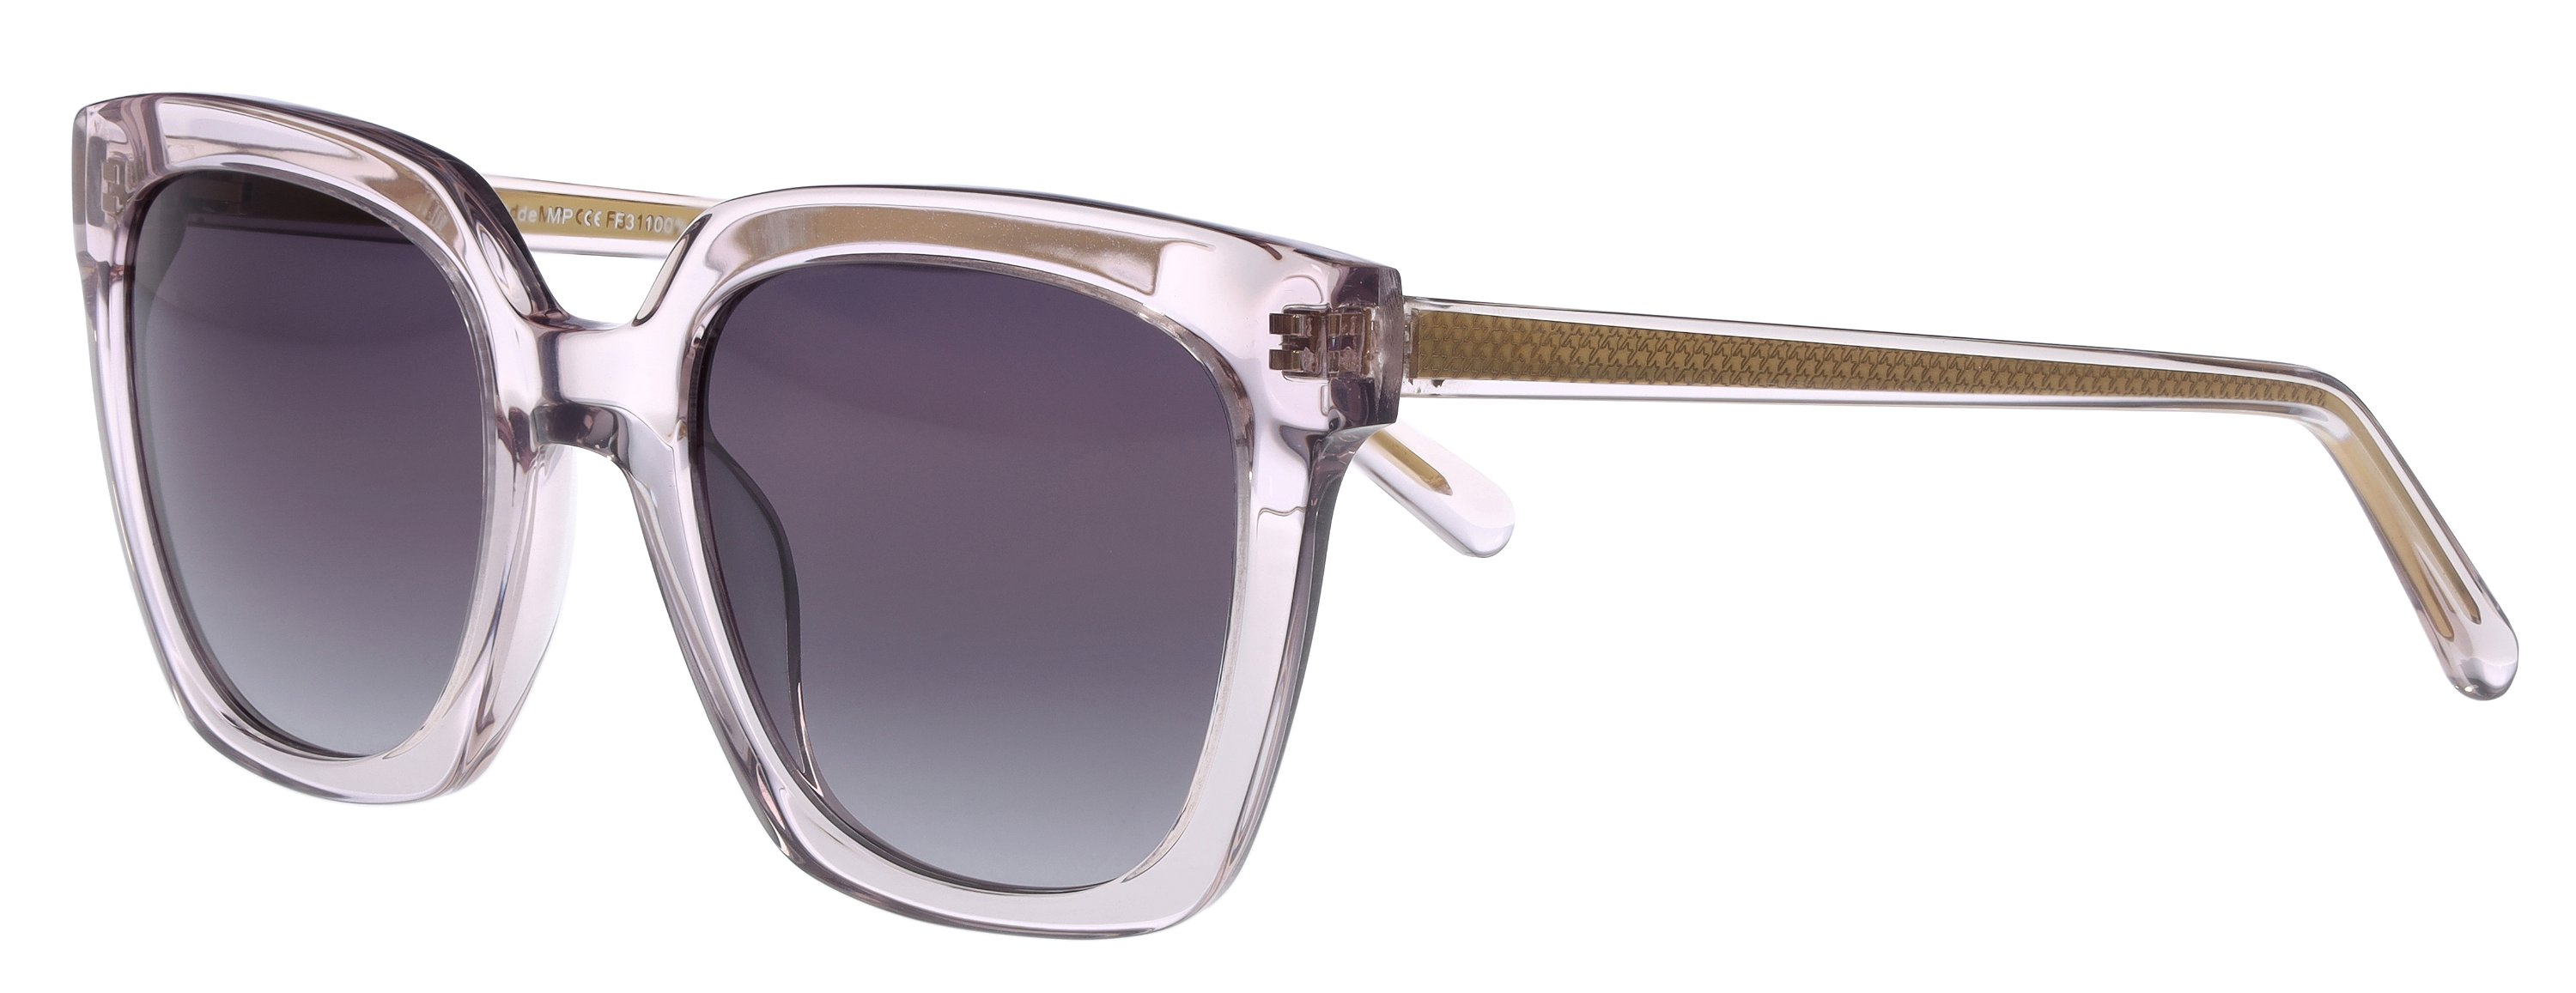 abele optik Sonnenbrille für Damen in lila transparent 720851